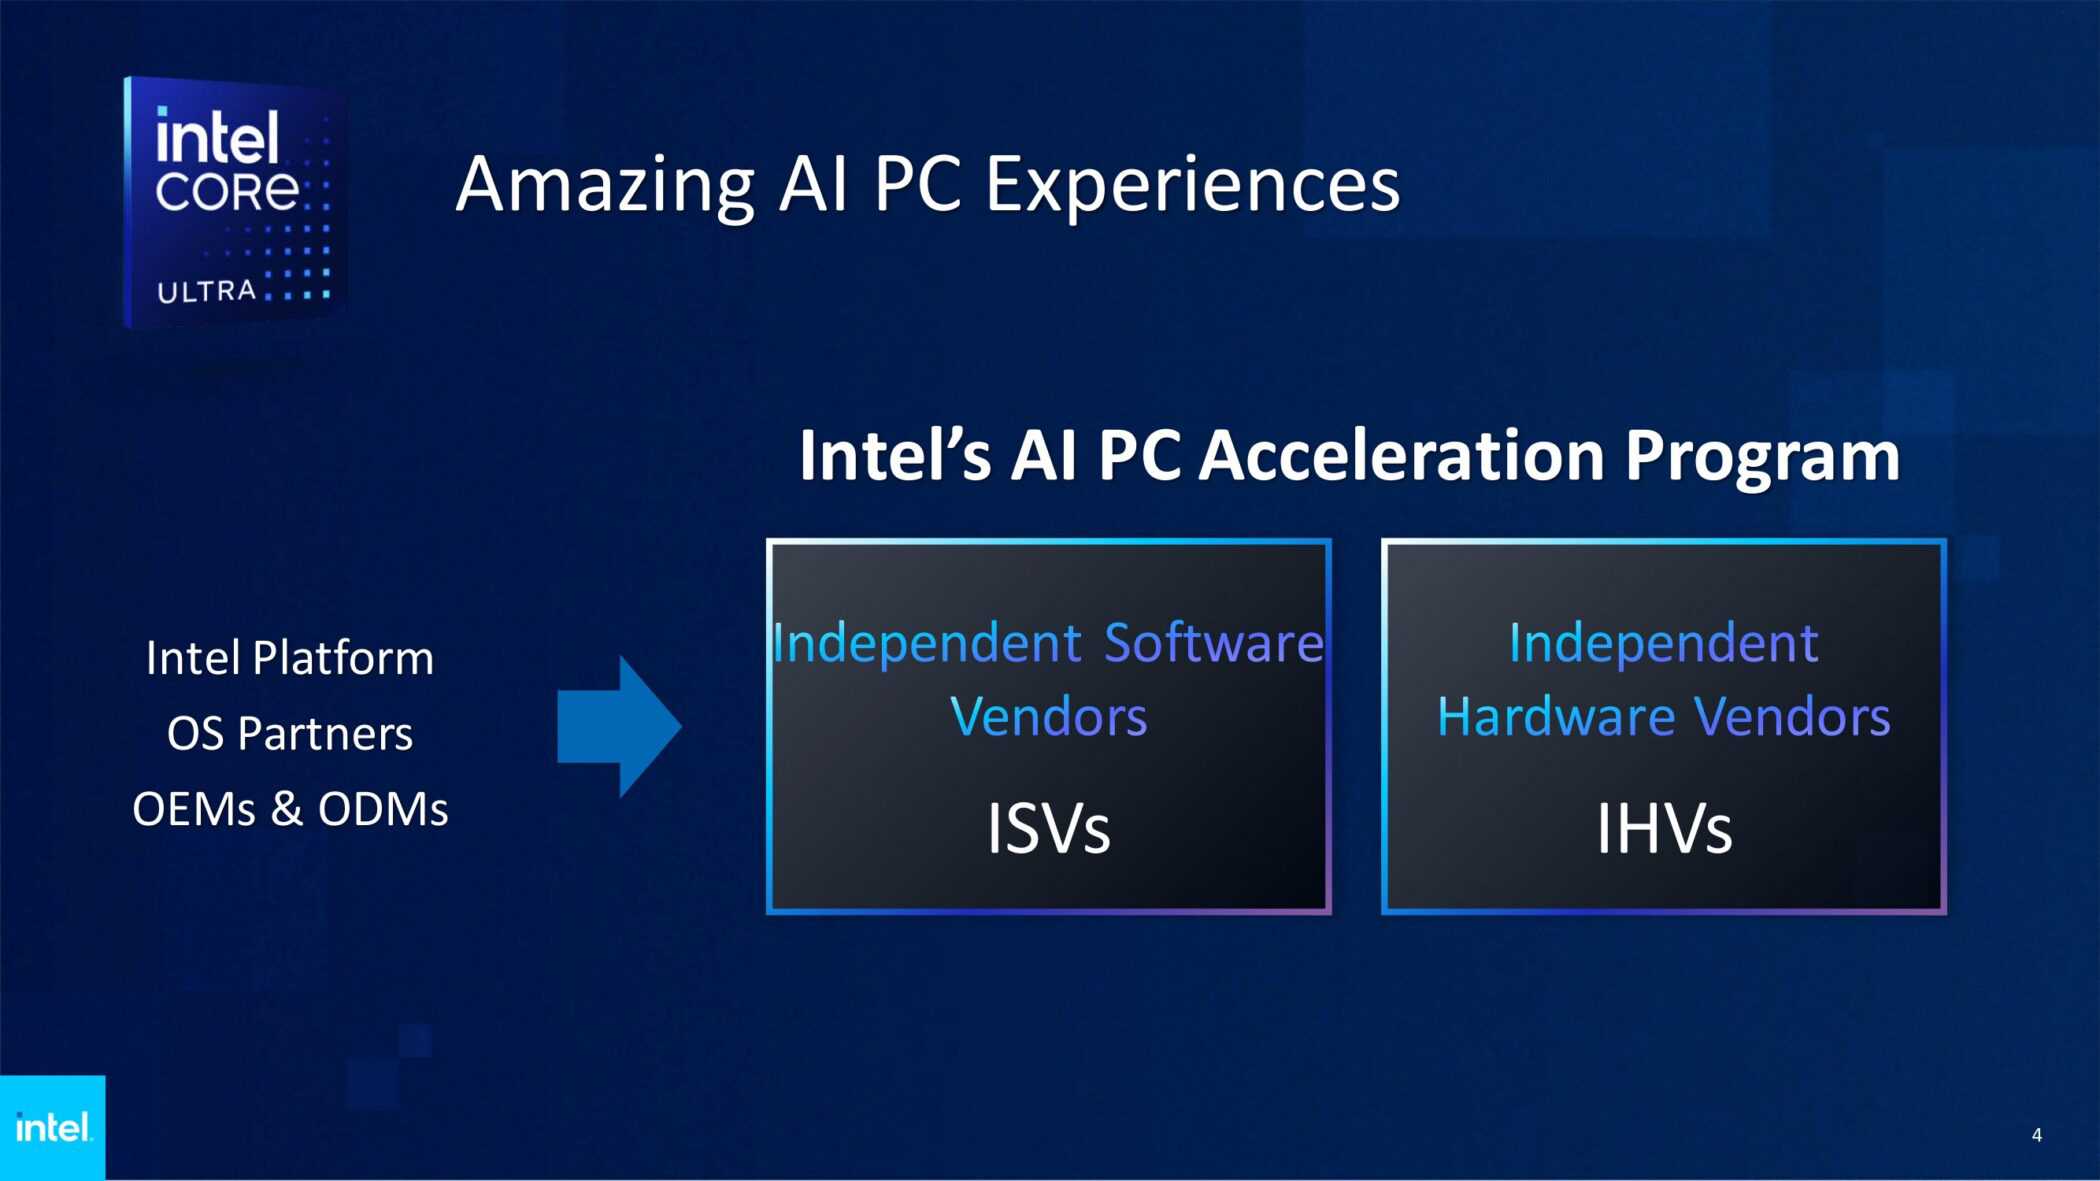 intel AI PC Acceleration Program Update v2 04